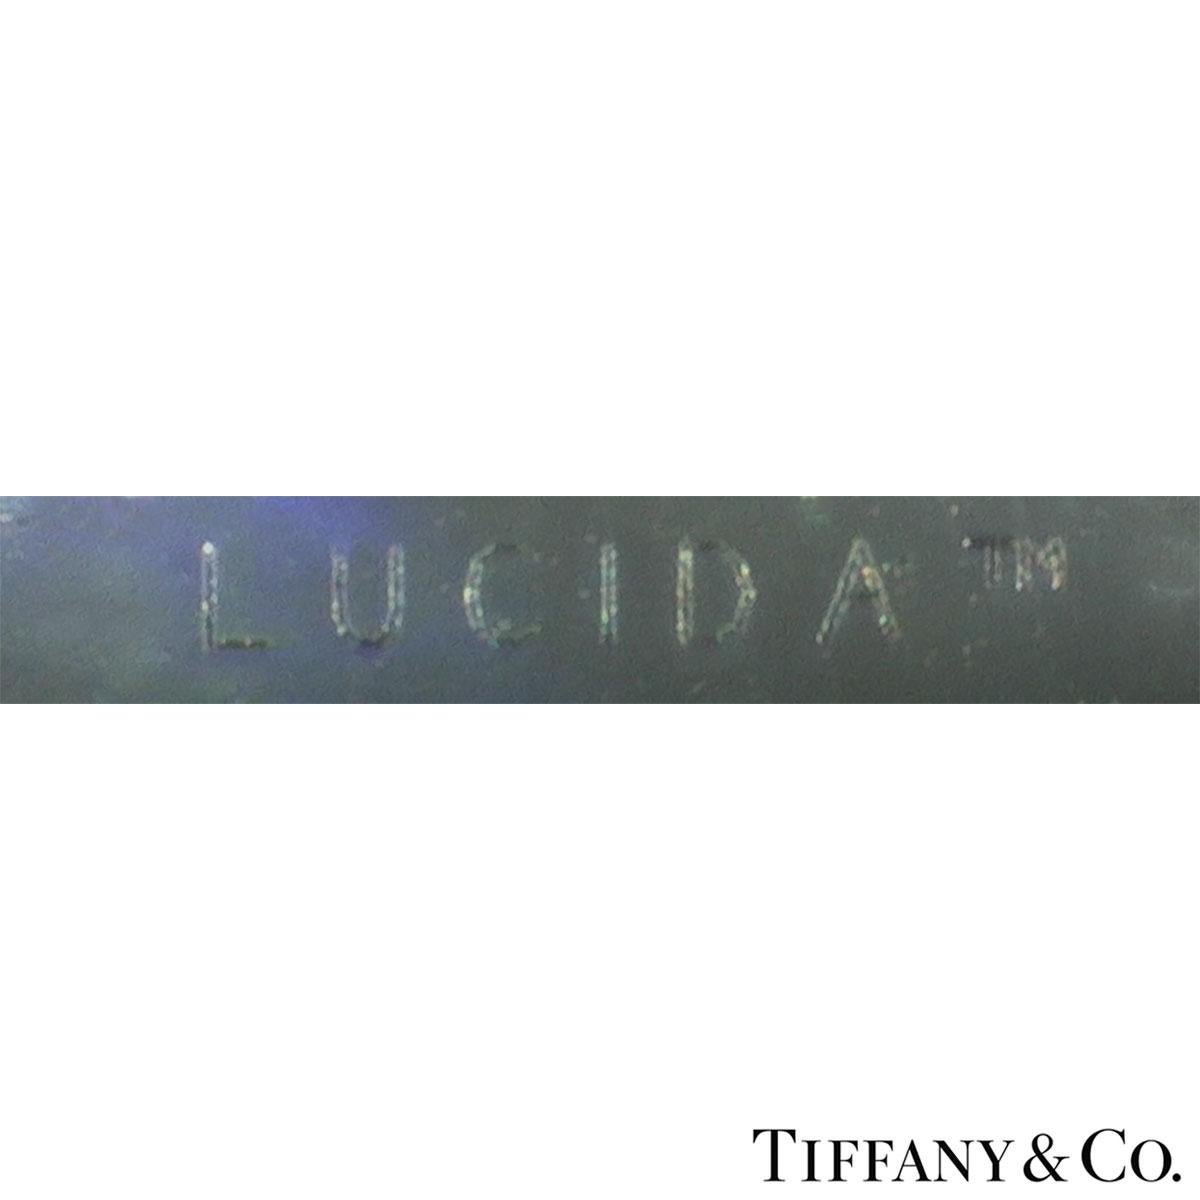 Square Cut Tiffany & Co. Lucida Cut Diamond Engagement Ring 1.13 Carat/D Color GIA Cert For Sale